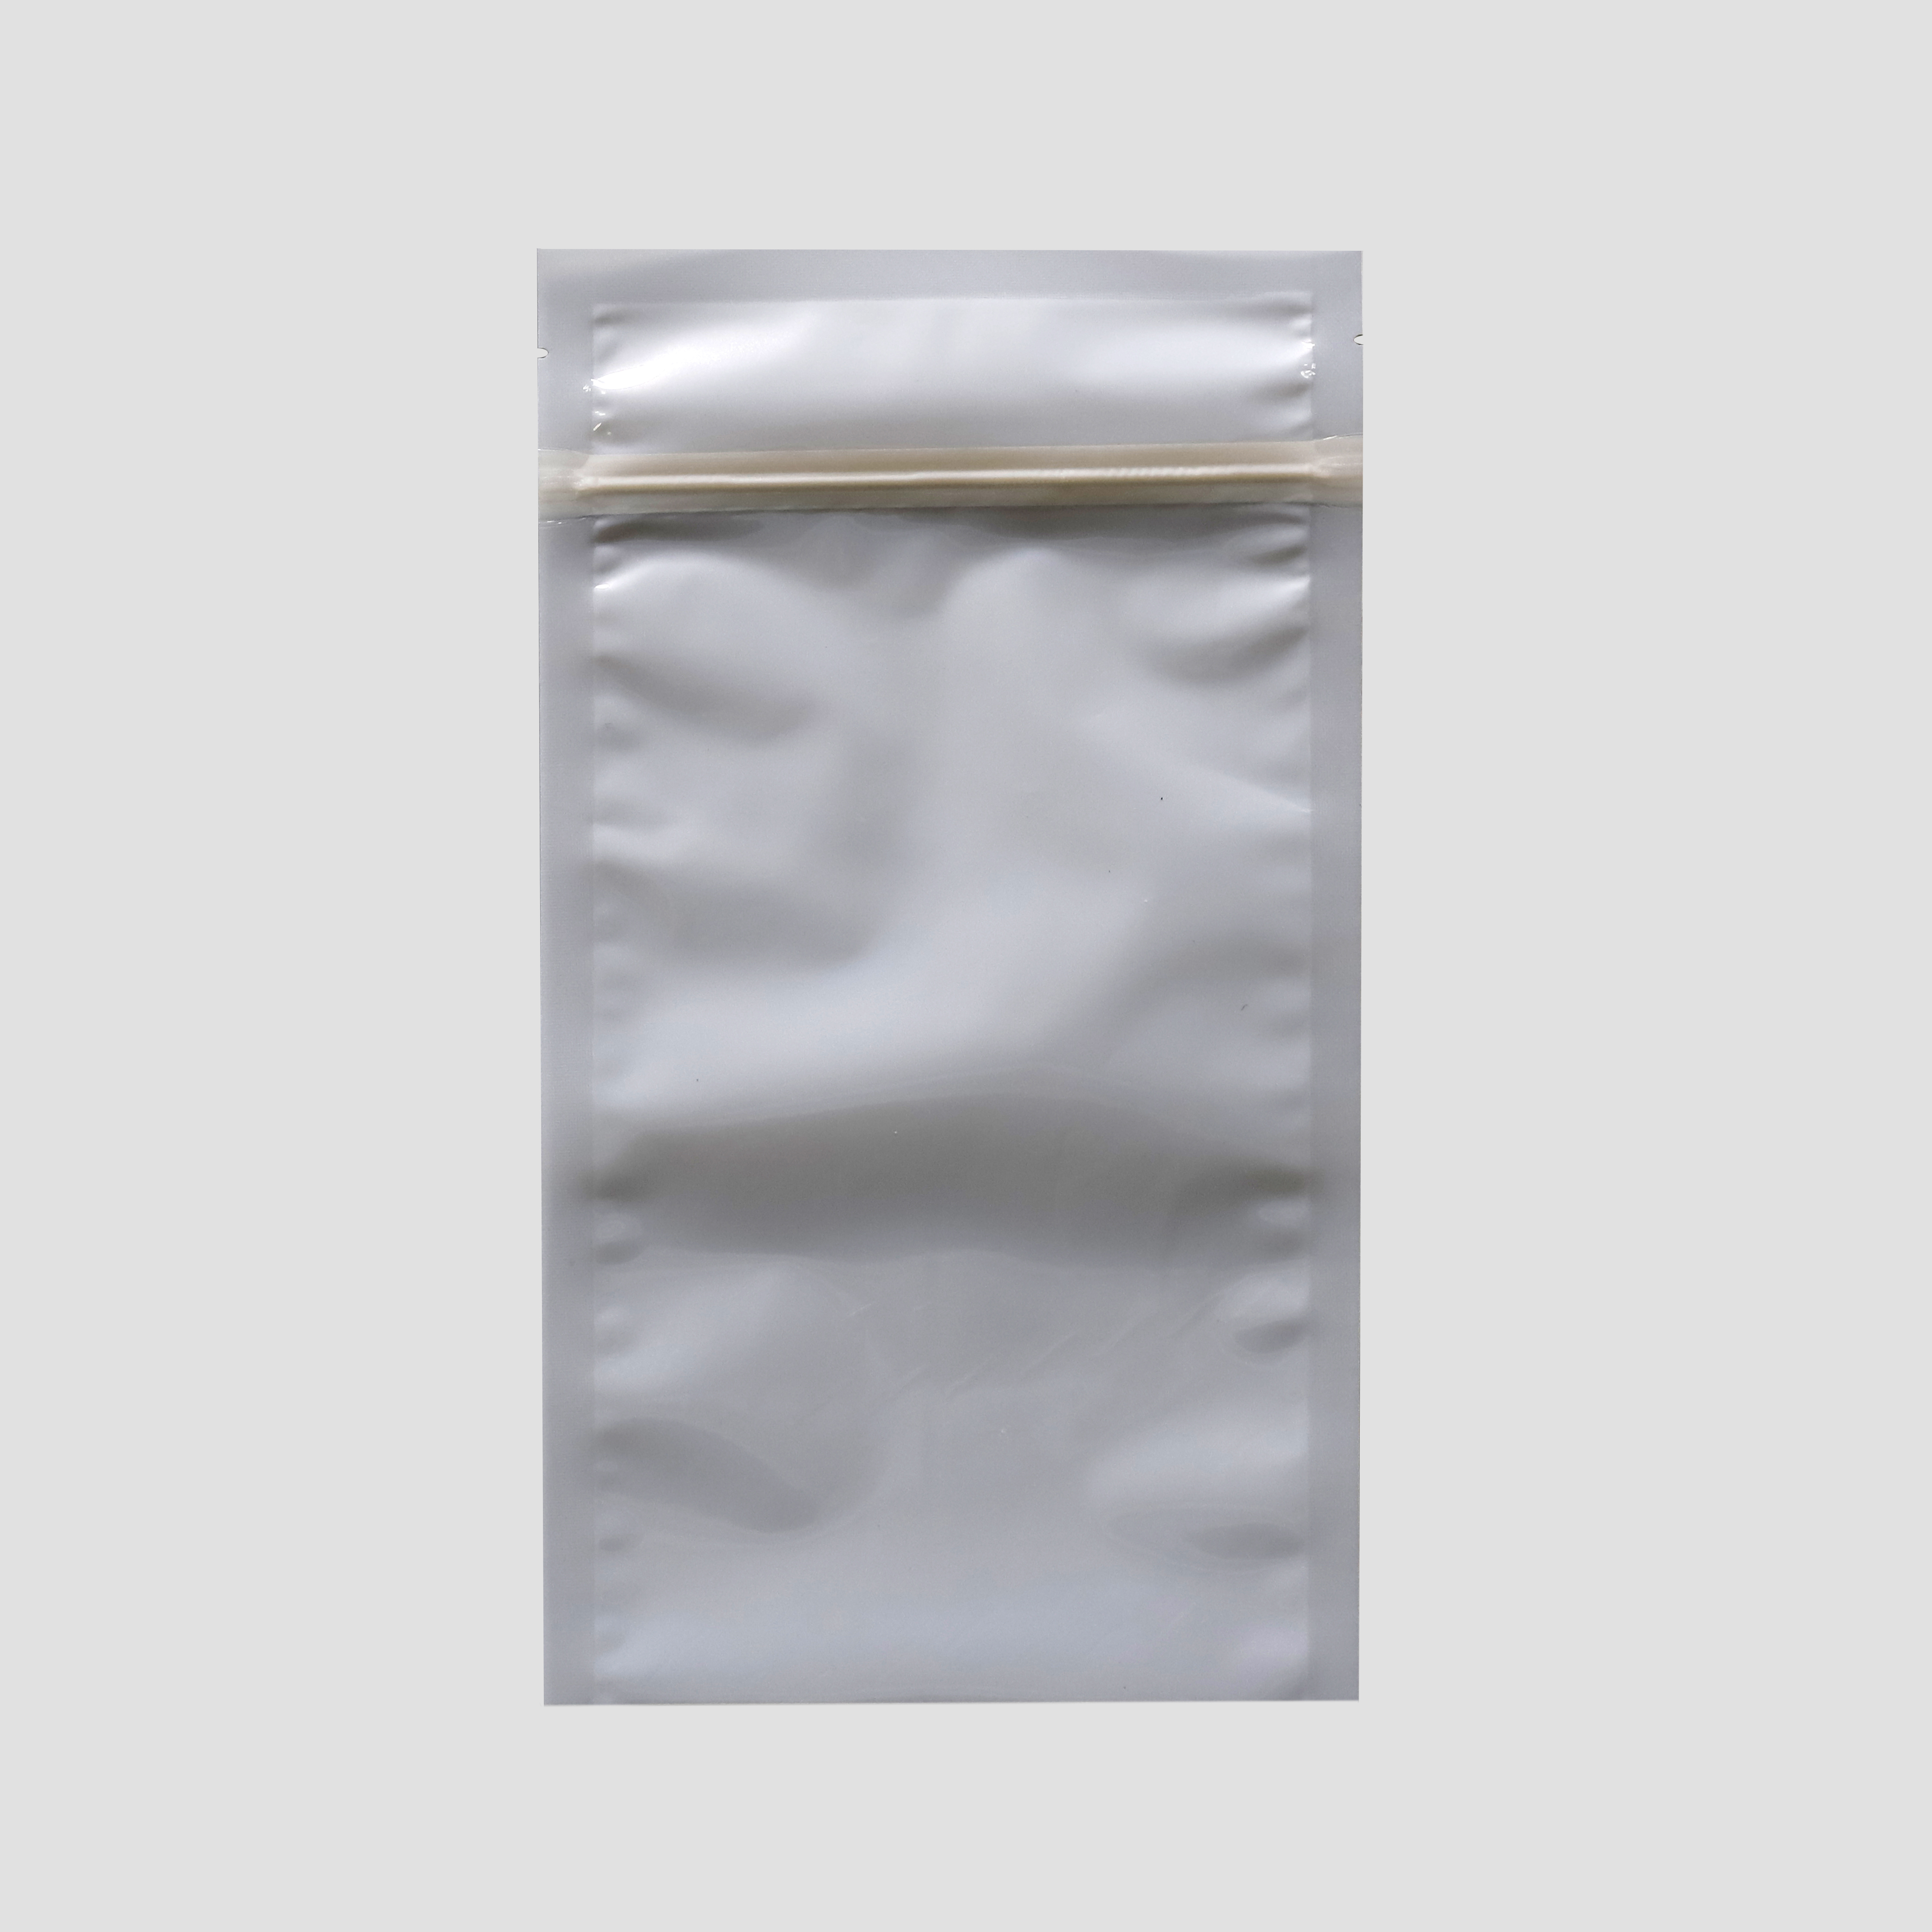 100% Bio-degradable 3 Sides Heat Seal BAG/Pouch